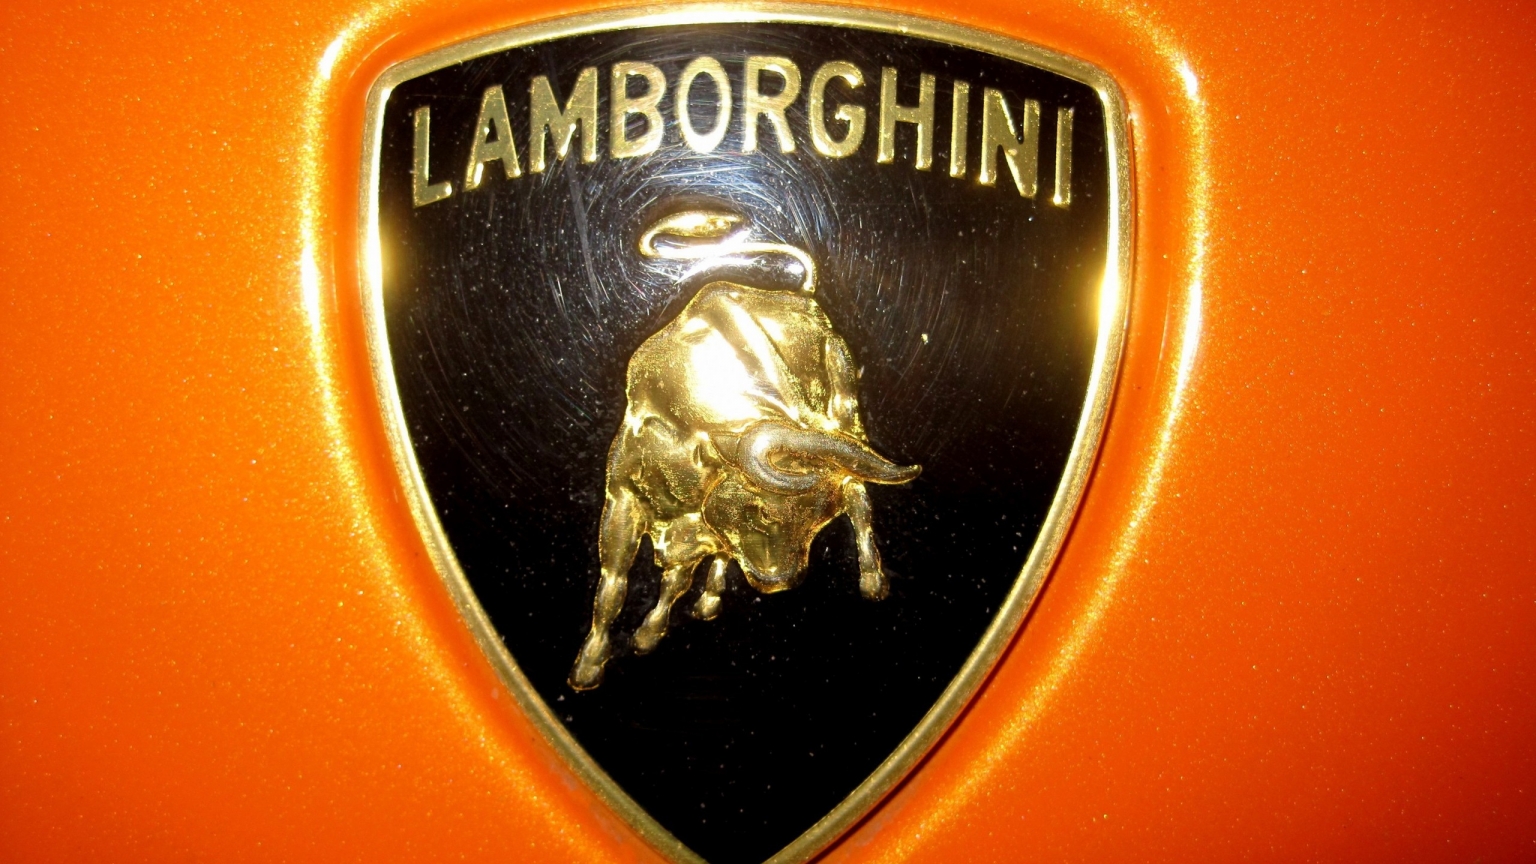 Lamborghini logo for 1536 x 864 HDTV resolution